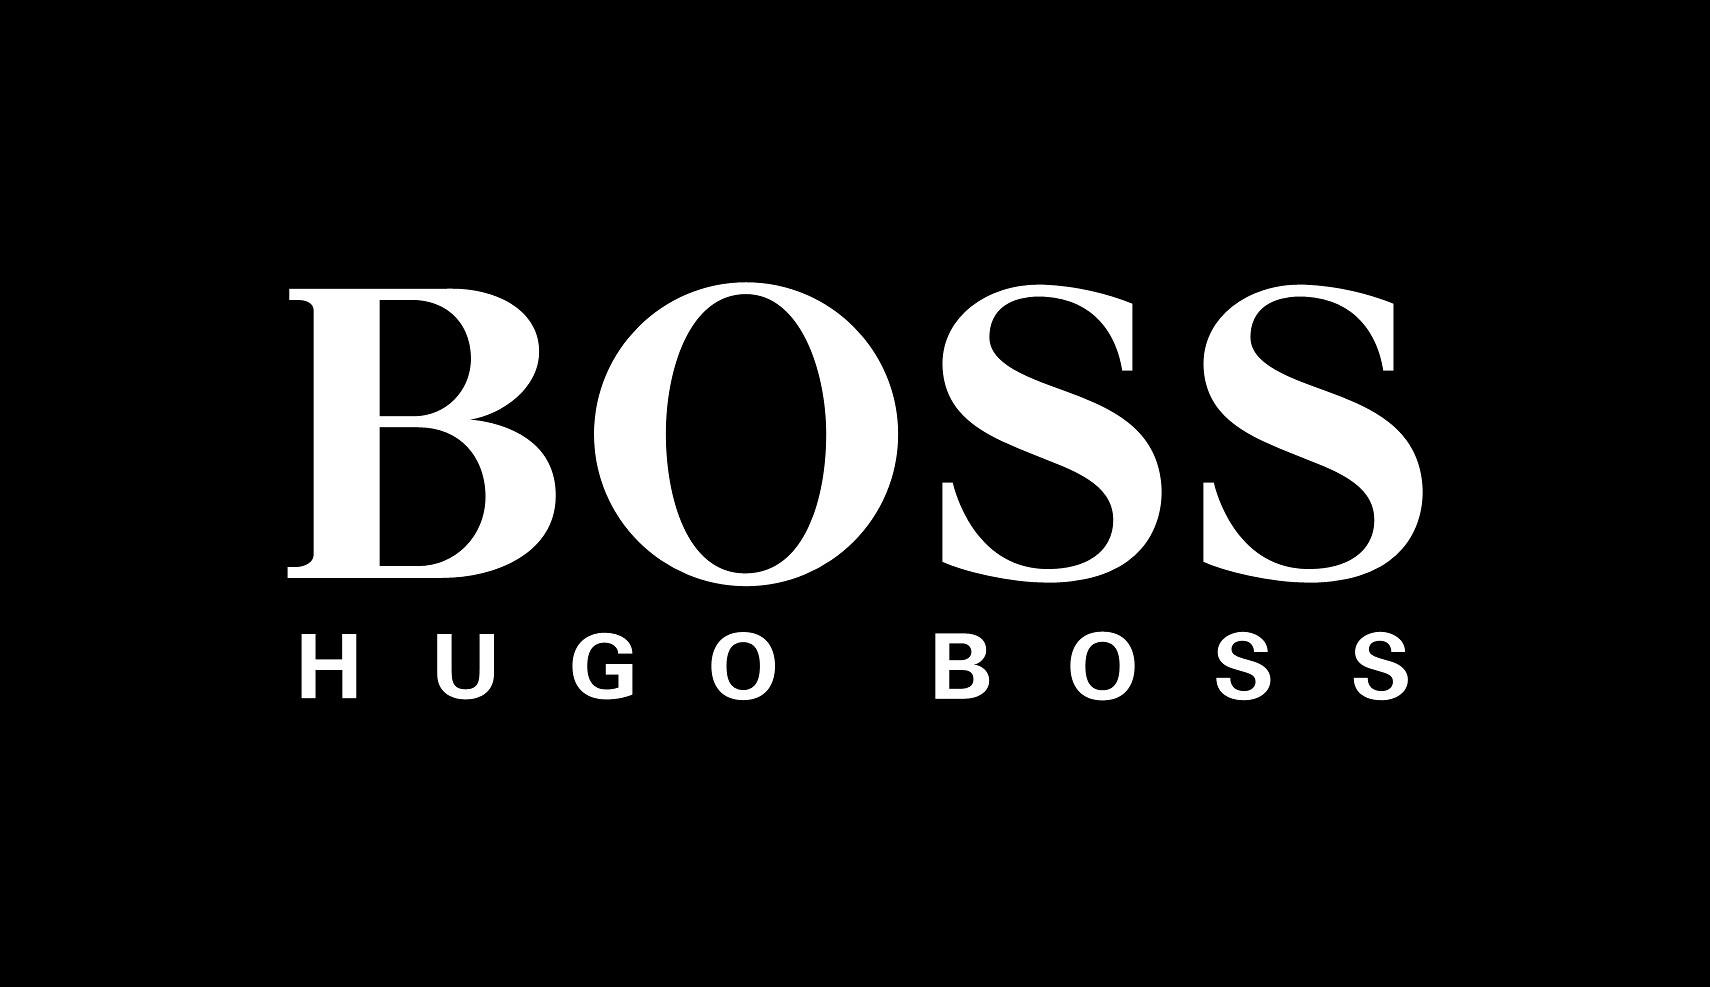 Логотип Hugo Boss